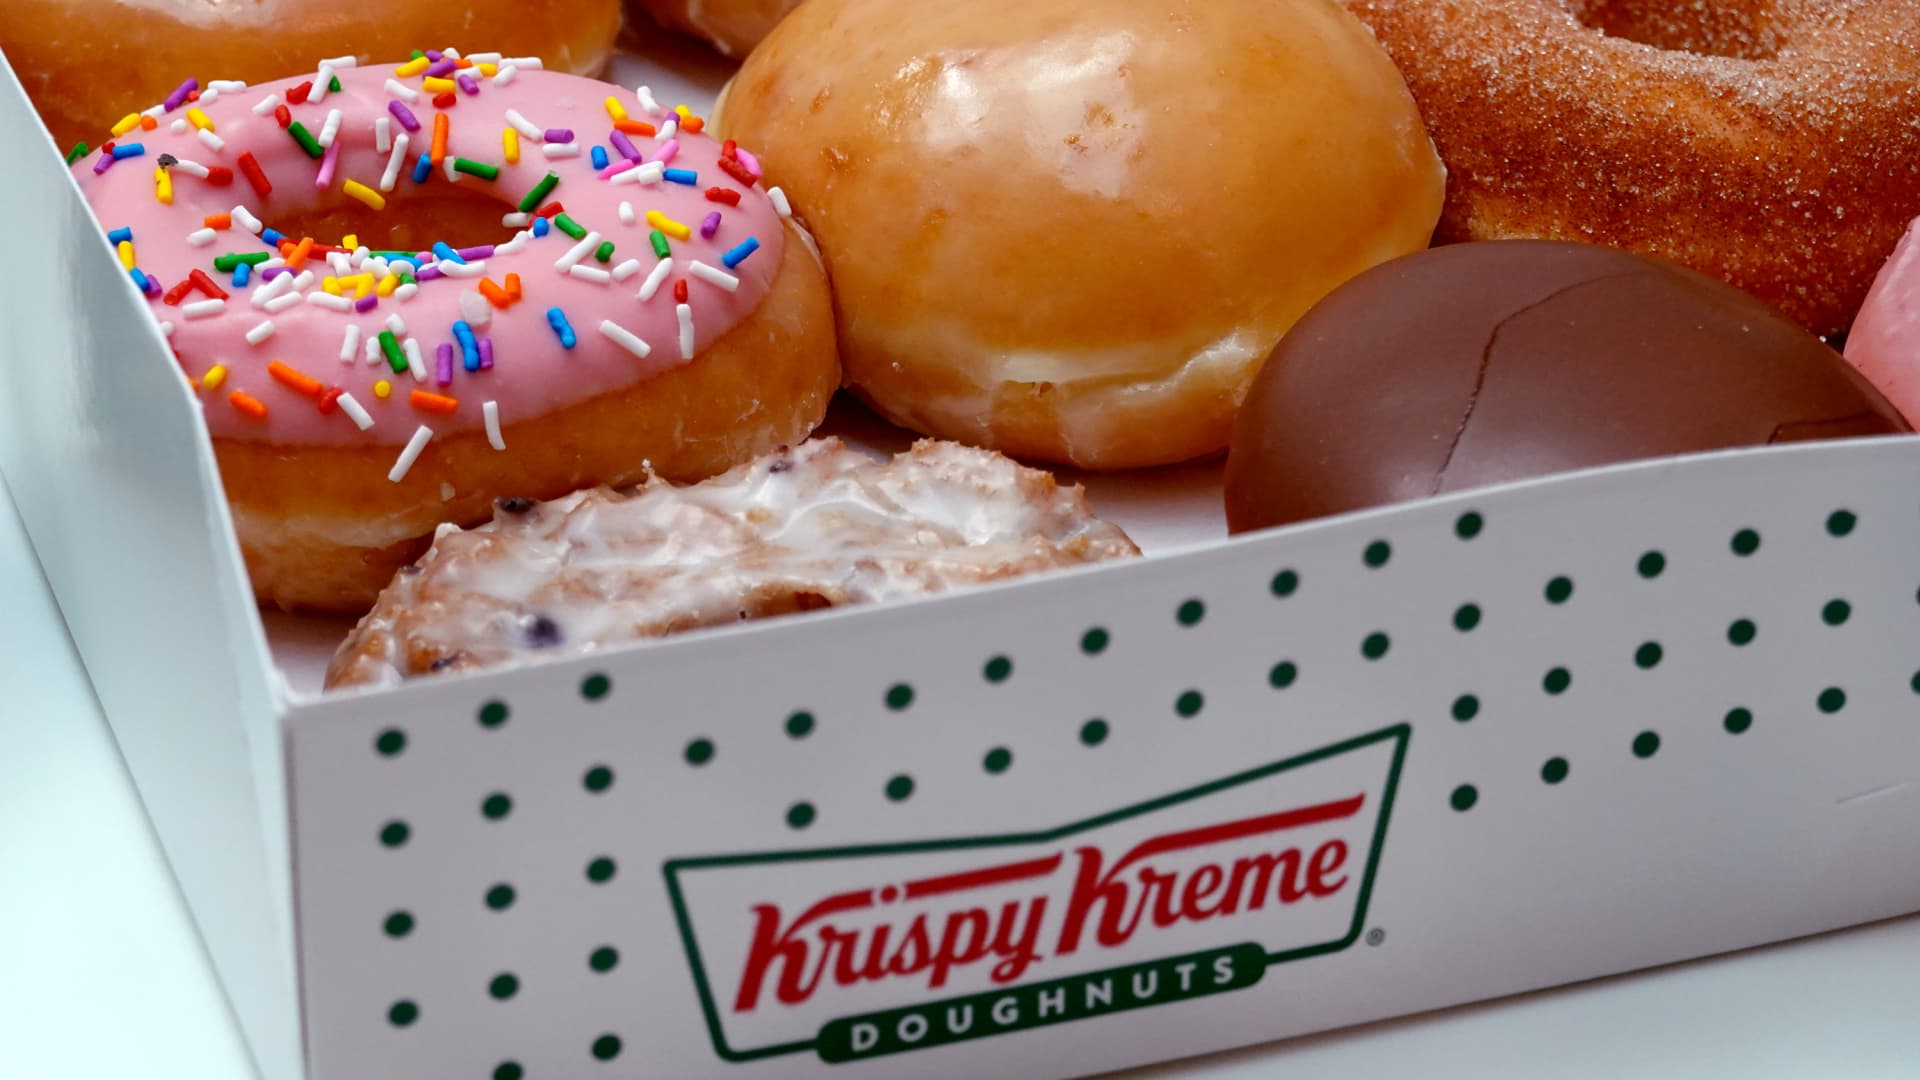 McDonald's to sell Krispy Kreme doughnuts in latest menu experiment